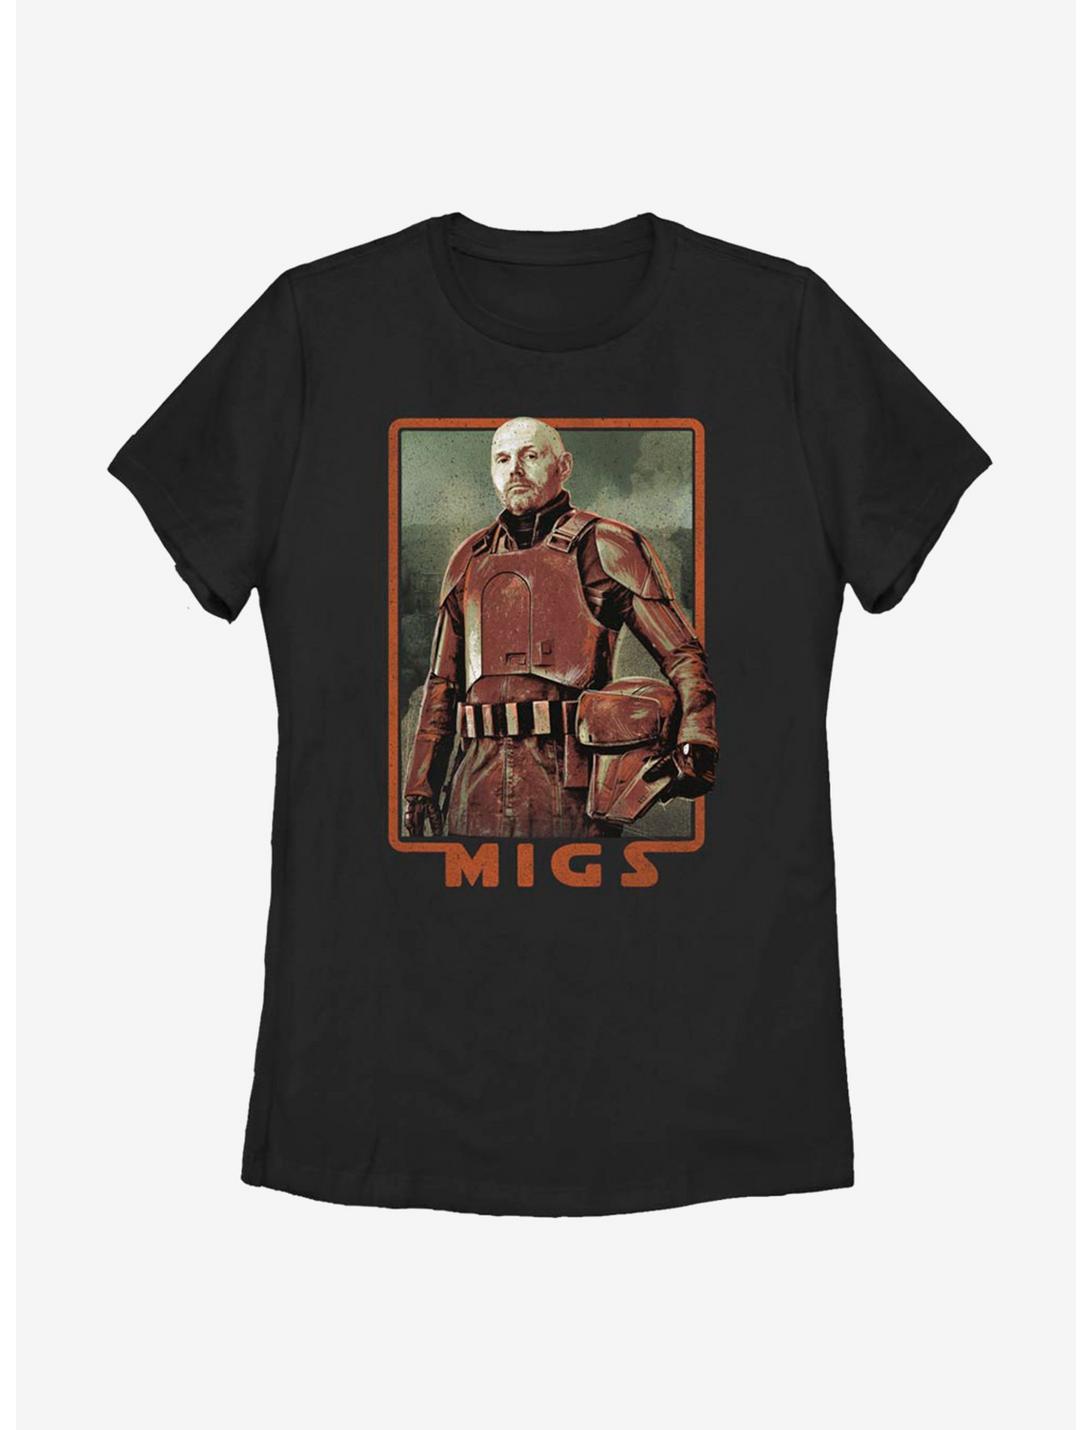 Star Wars The Mandalorian Season 2 Migs Womens T-Shirt, BLACK, hi-res